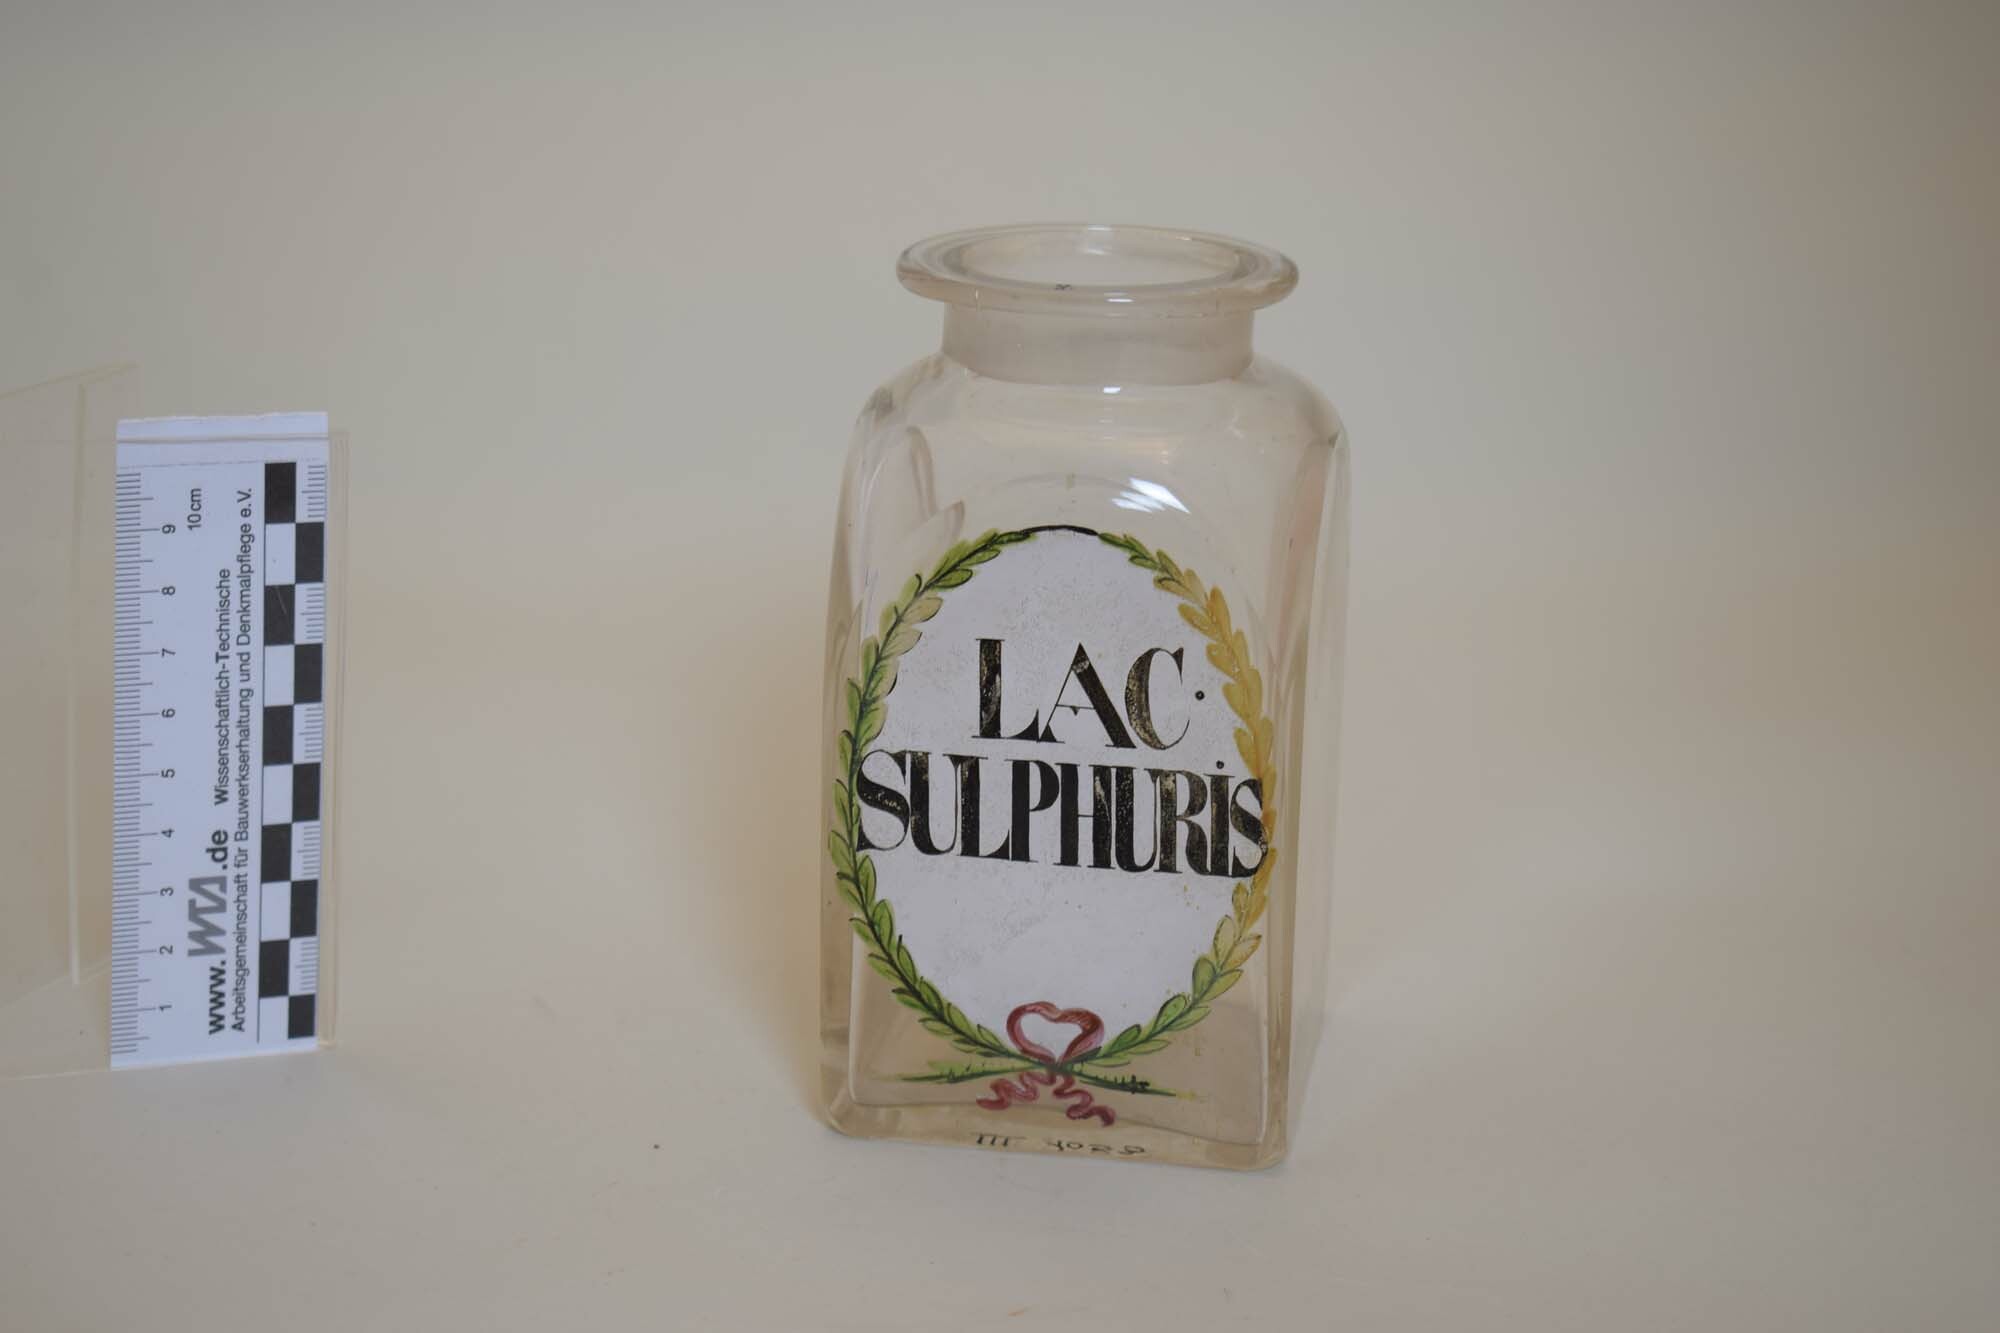 Apothekenflasche "Lac sulphuris" (Schwefelmilch) (Heimatmuseum Dohna CC BY-NC-SA)